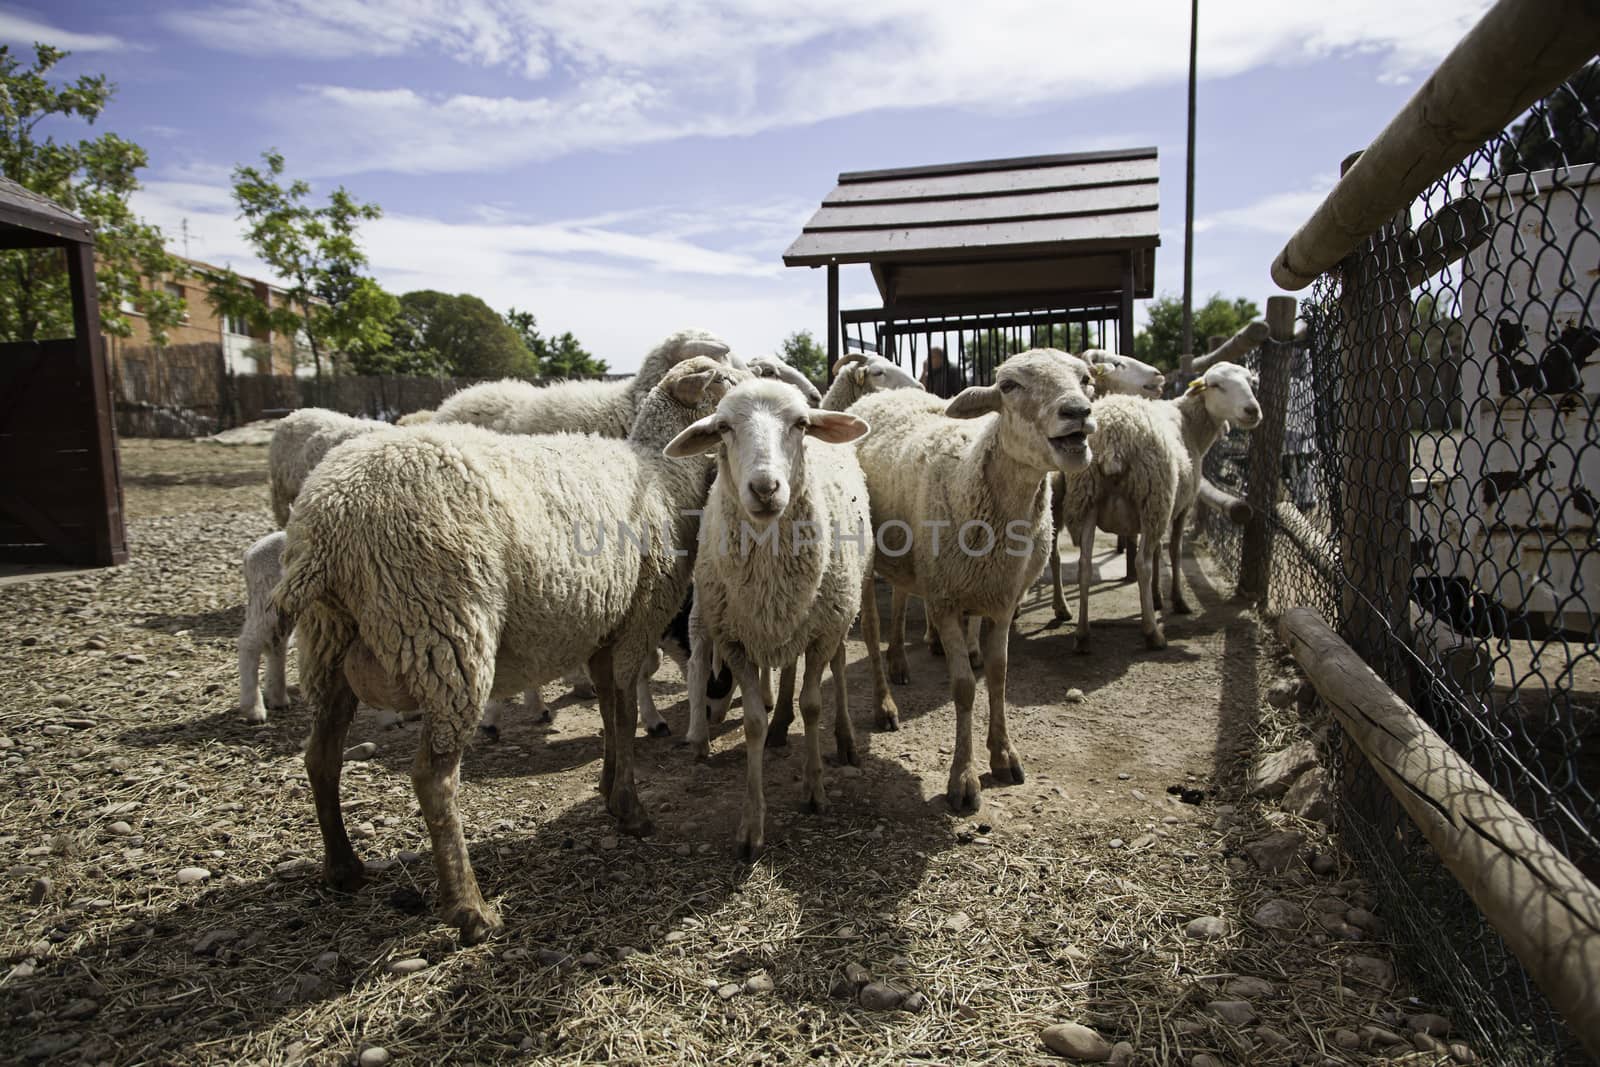 Sheep on a farm, detail of mammalian animals, wool and milk, food production